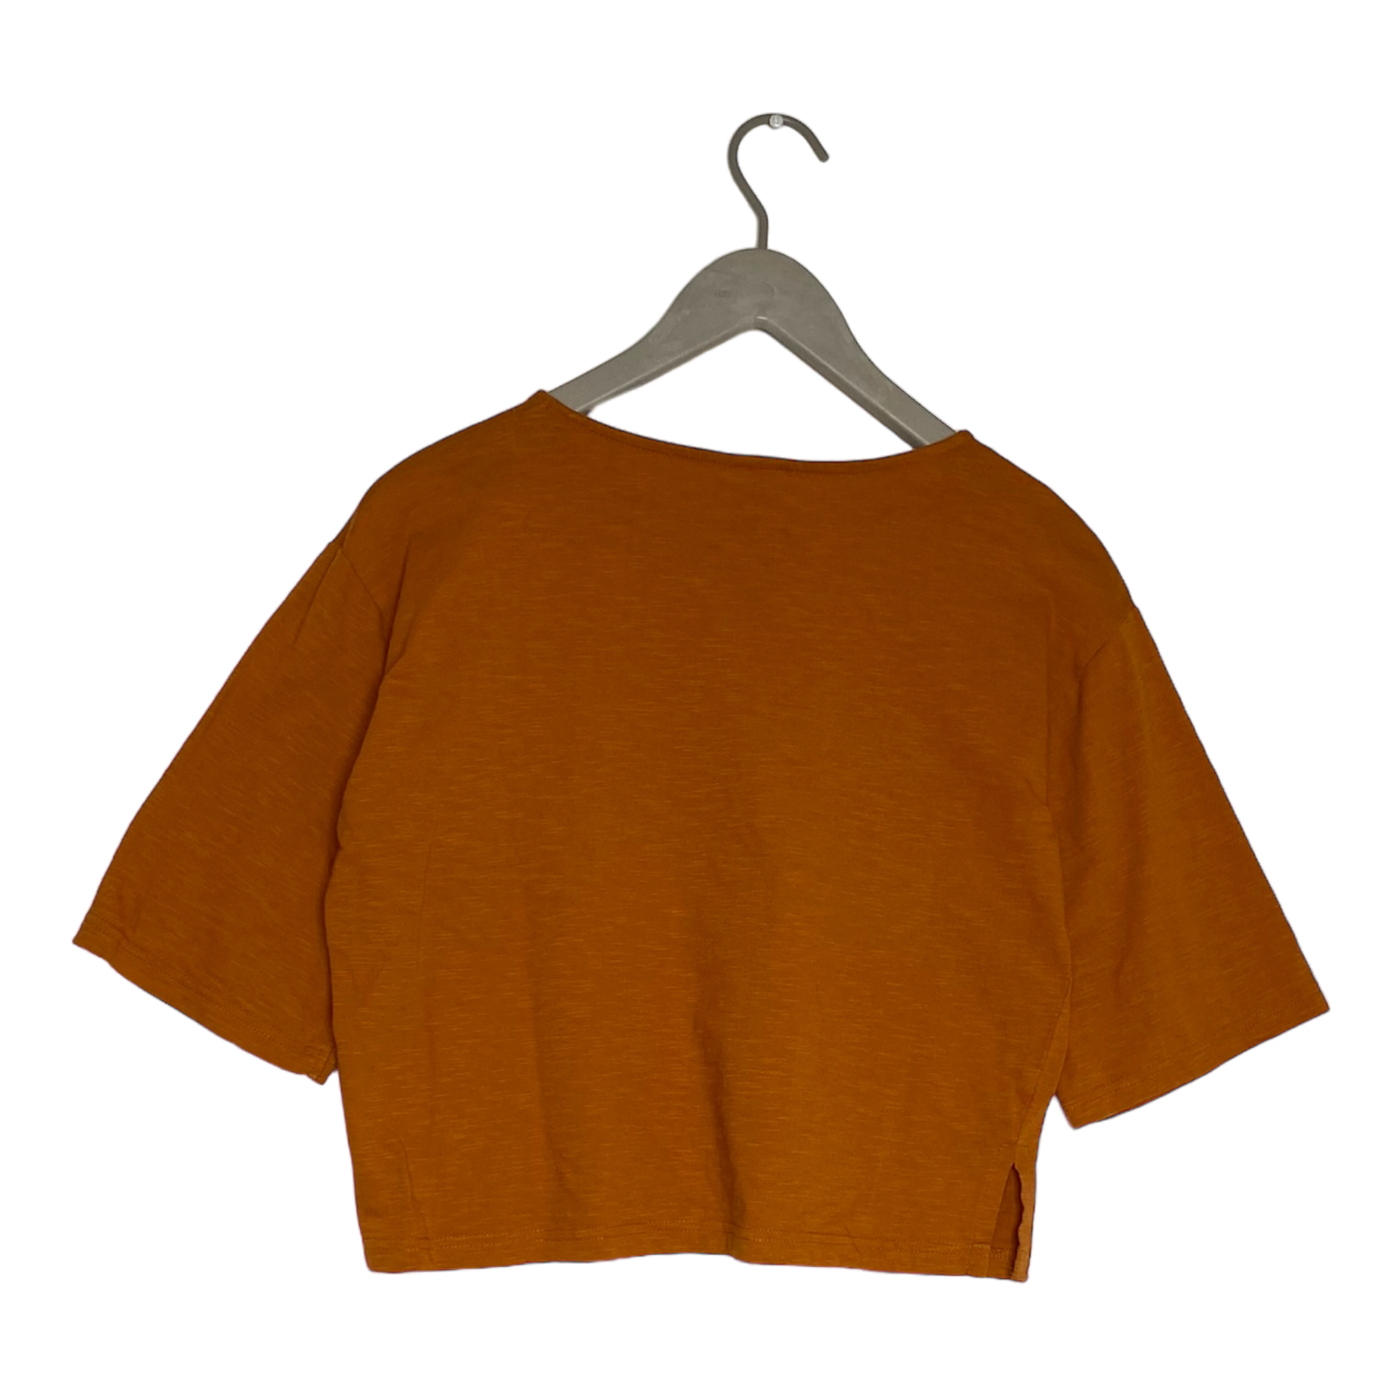 Mainio tricot shirt, orange | woman XS